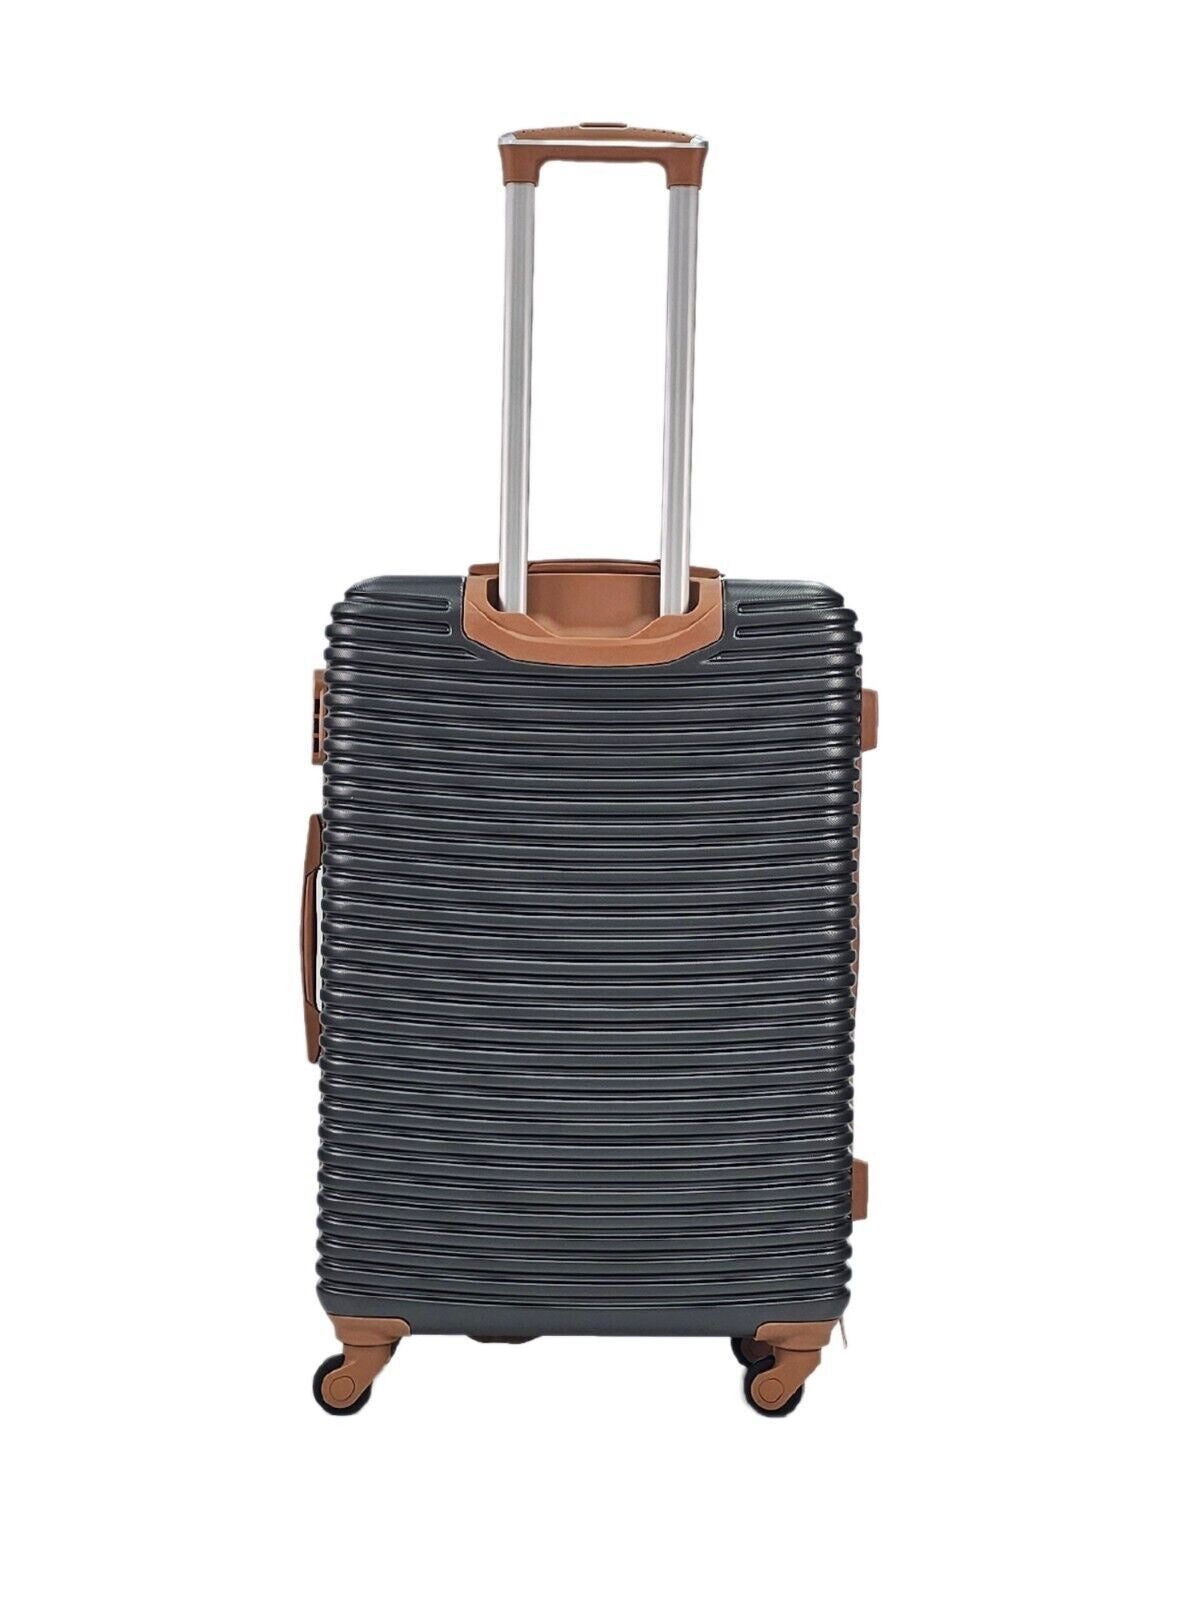 Hardshell Cabin Grey Suitcase Set Robust 4 Wheel ABS Luggage Travel Bag